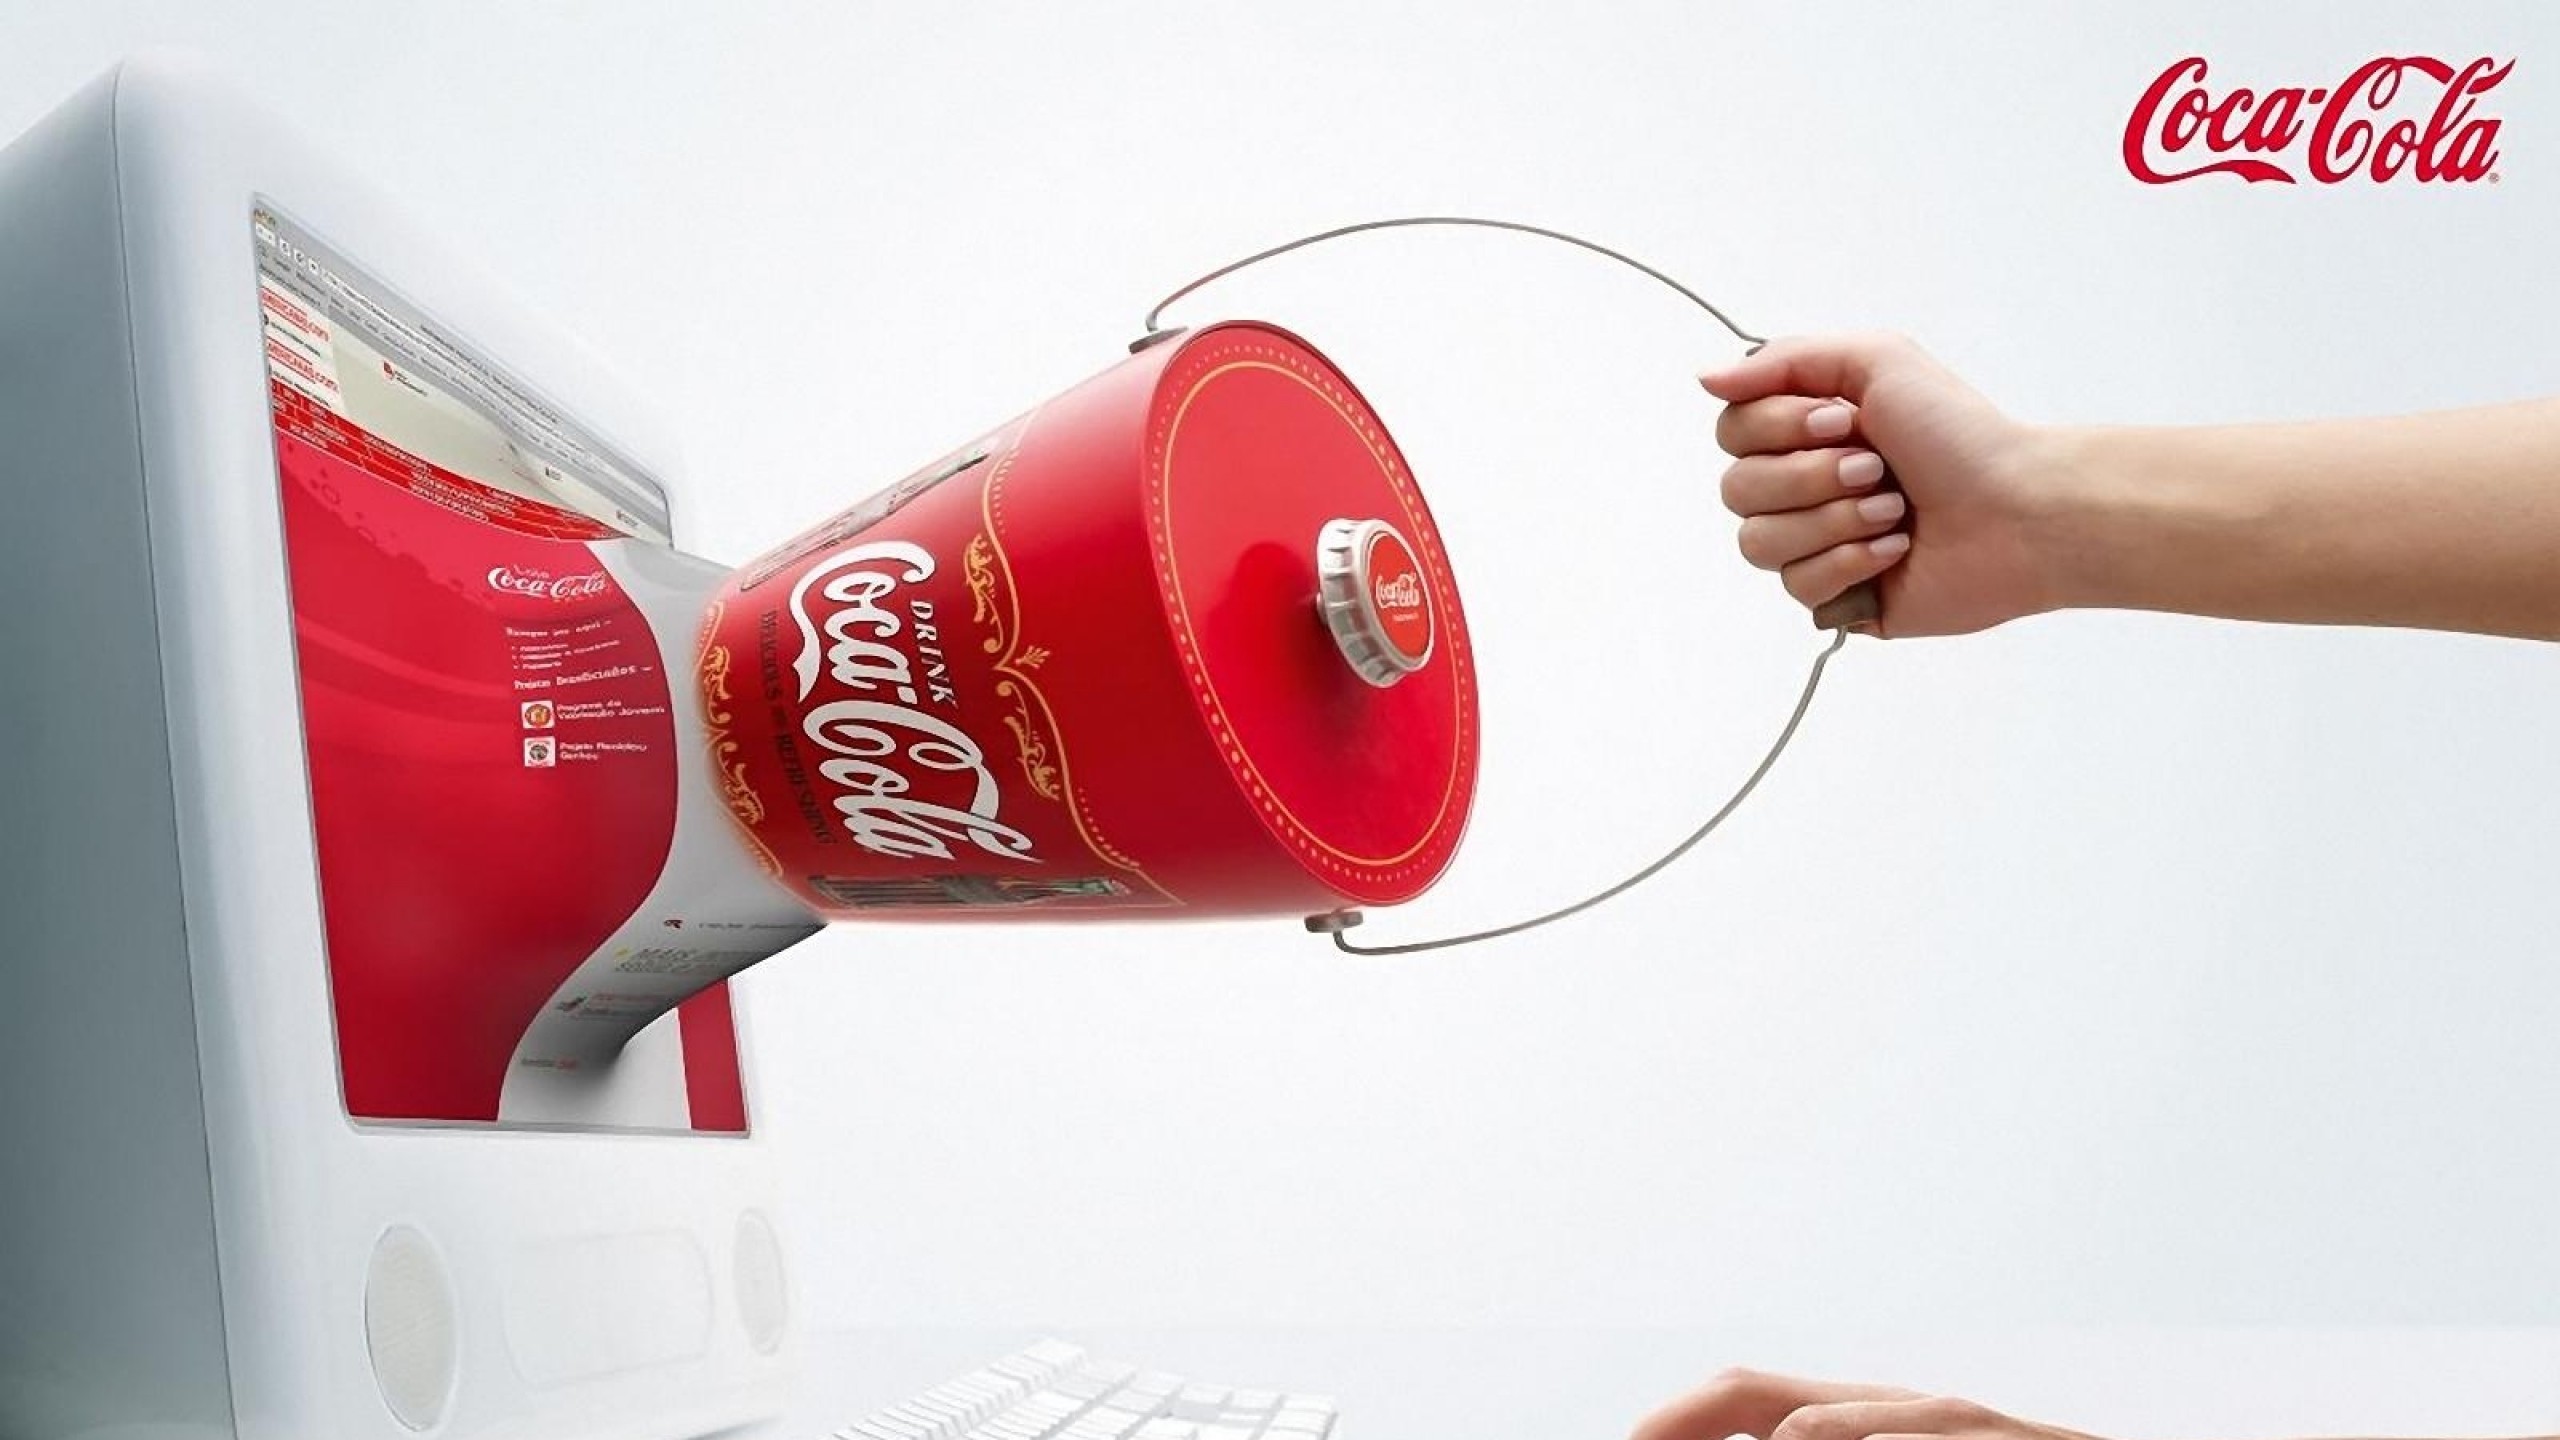 2560x1440  Wallpaper coca-cola, computer, monitor, hand, bucket